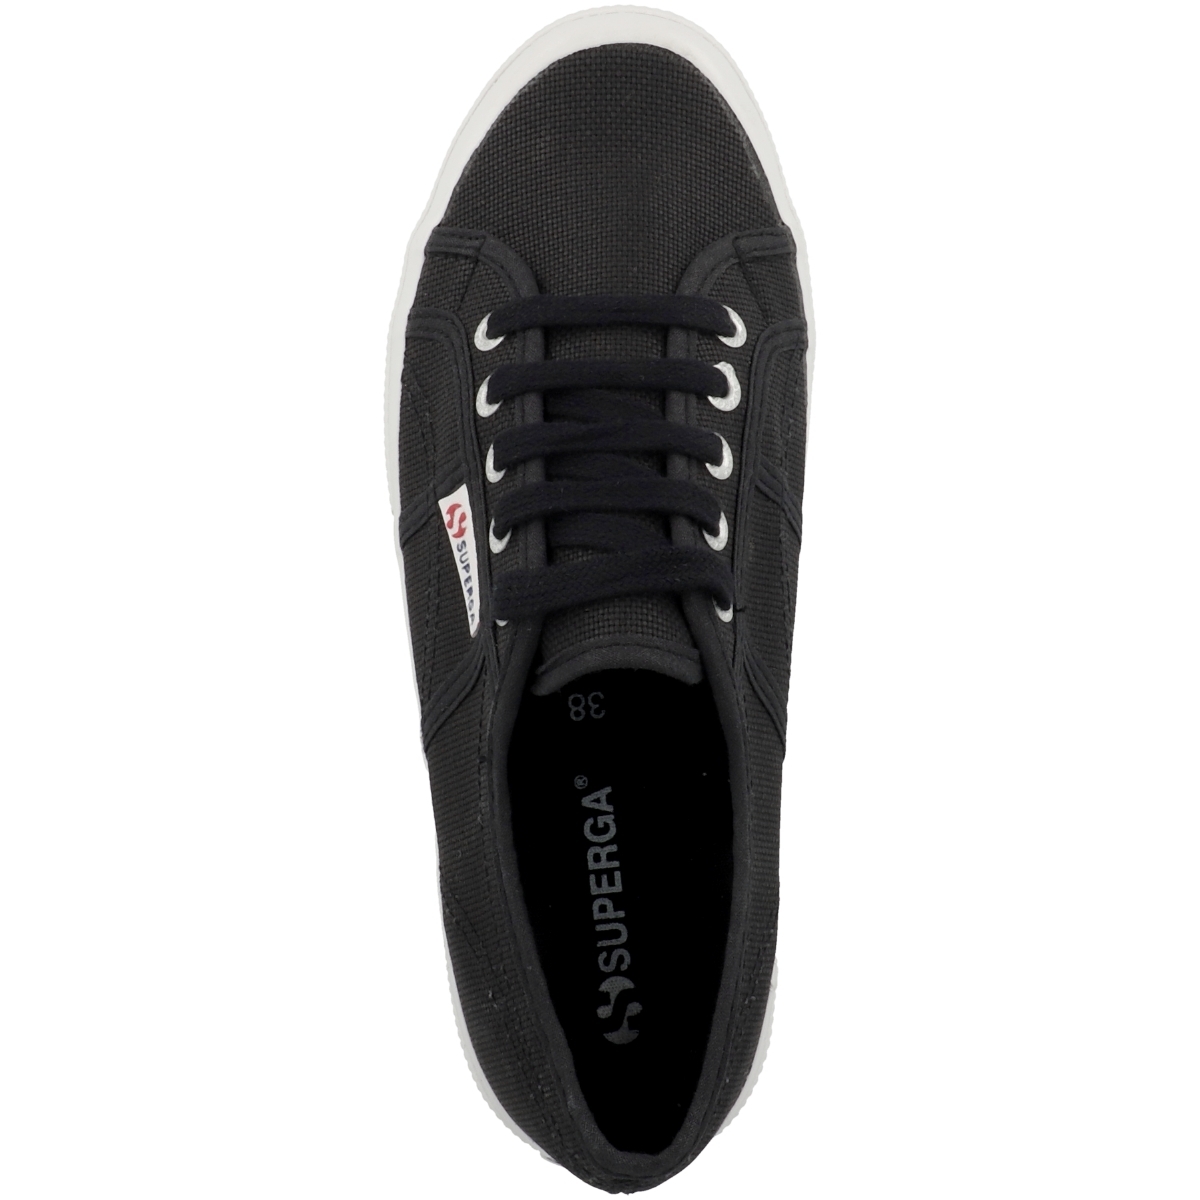 Superga 2750 Cotu Classic Schuhe schwarz